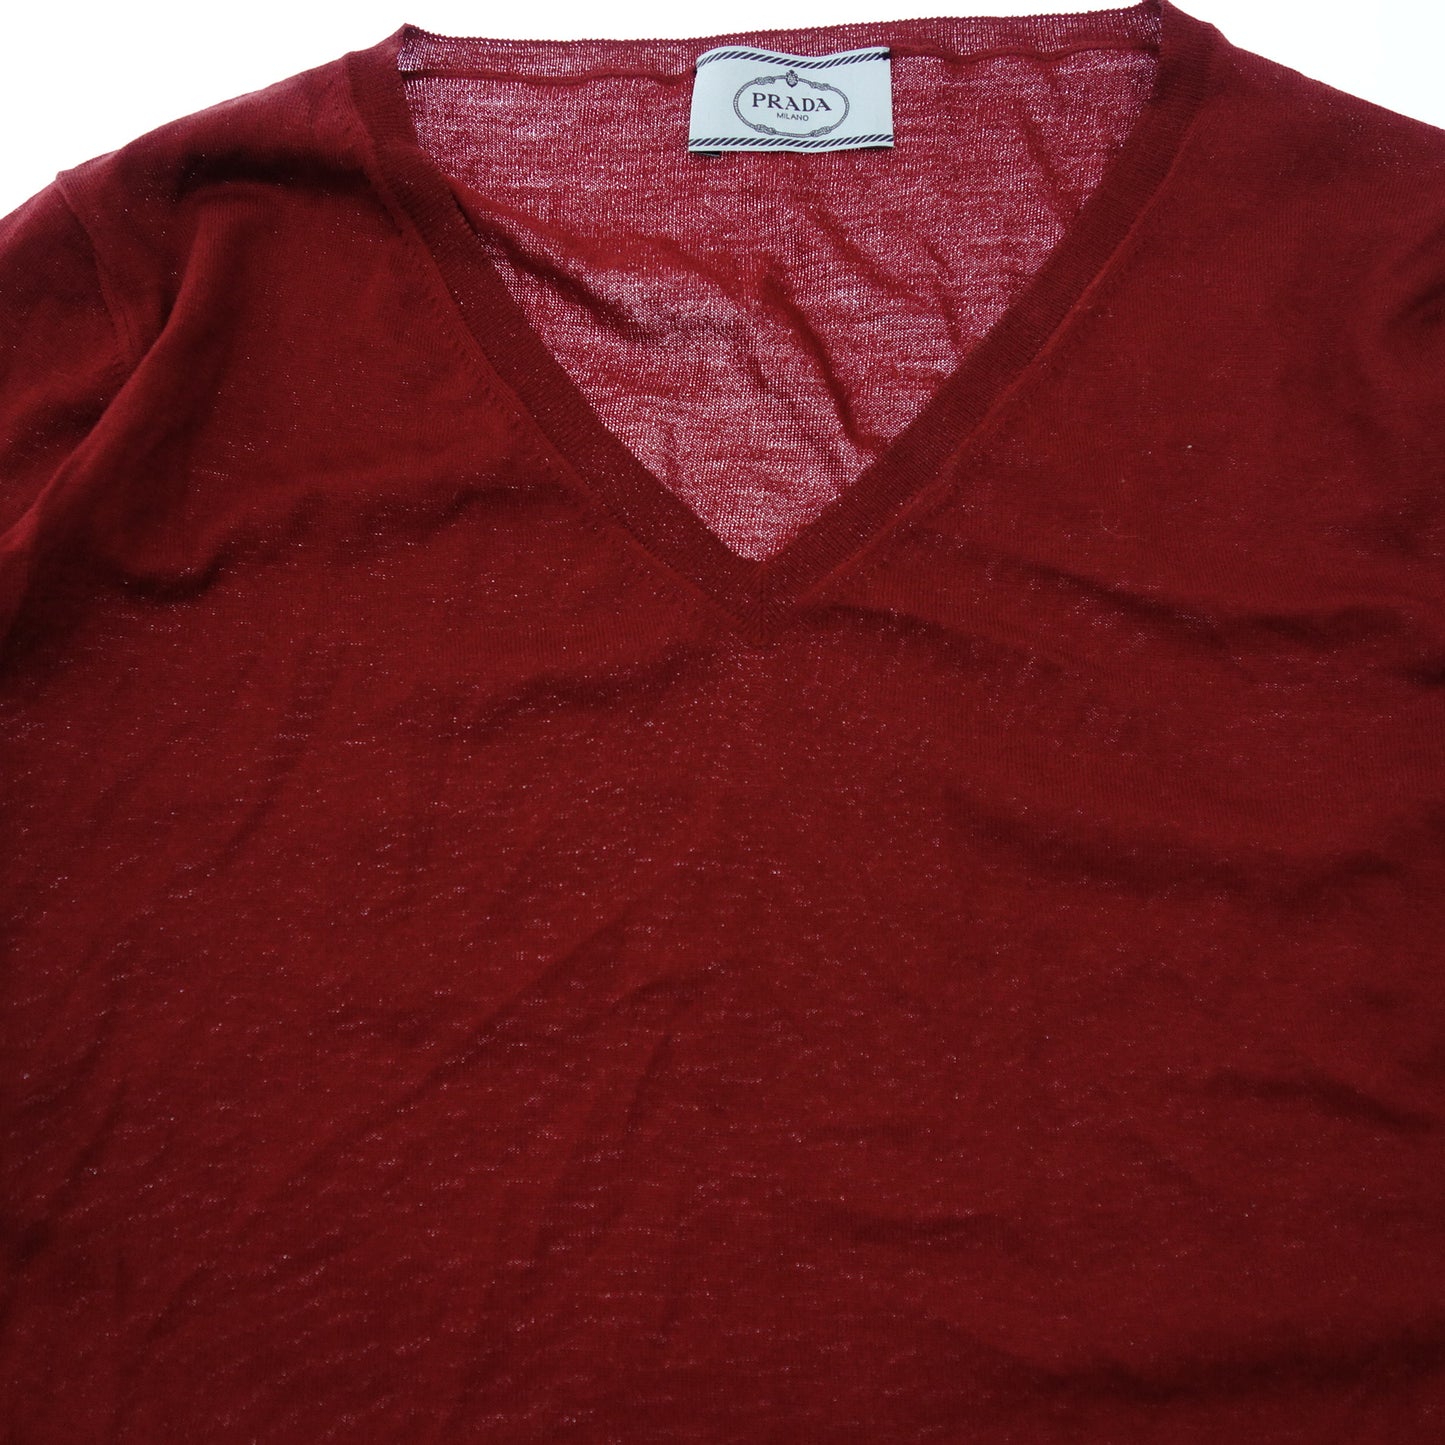 Prada knit sweater wool V-neck red ladies 38 PRADA [AFB45] [Used] 